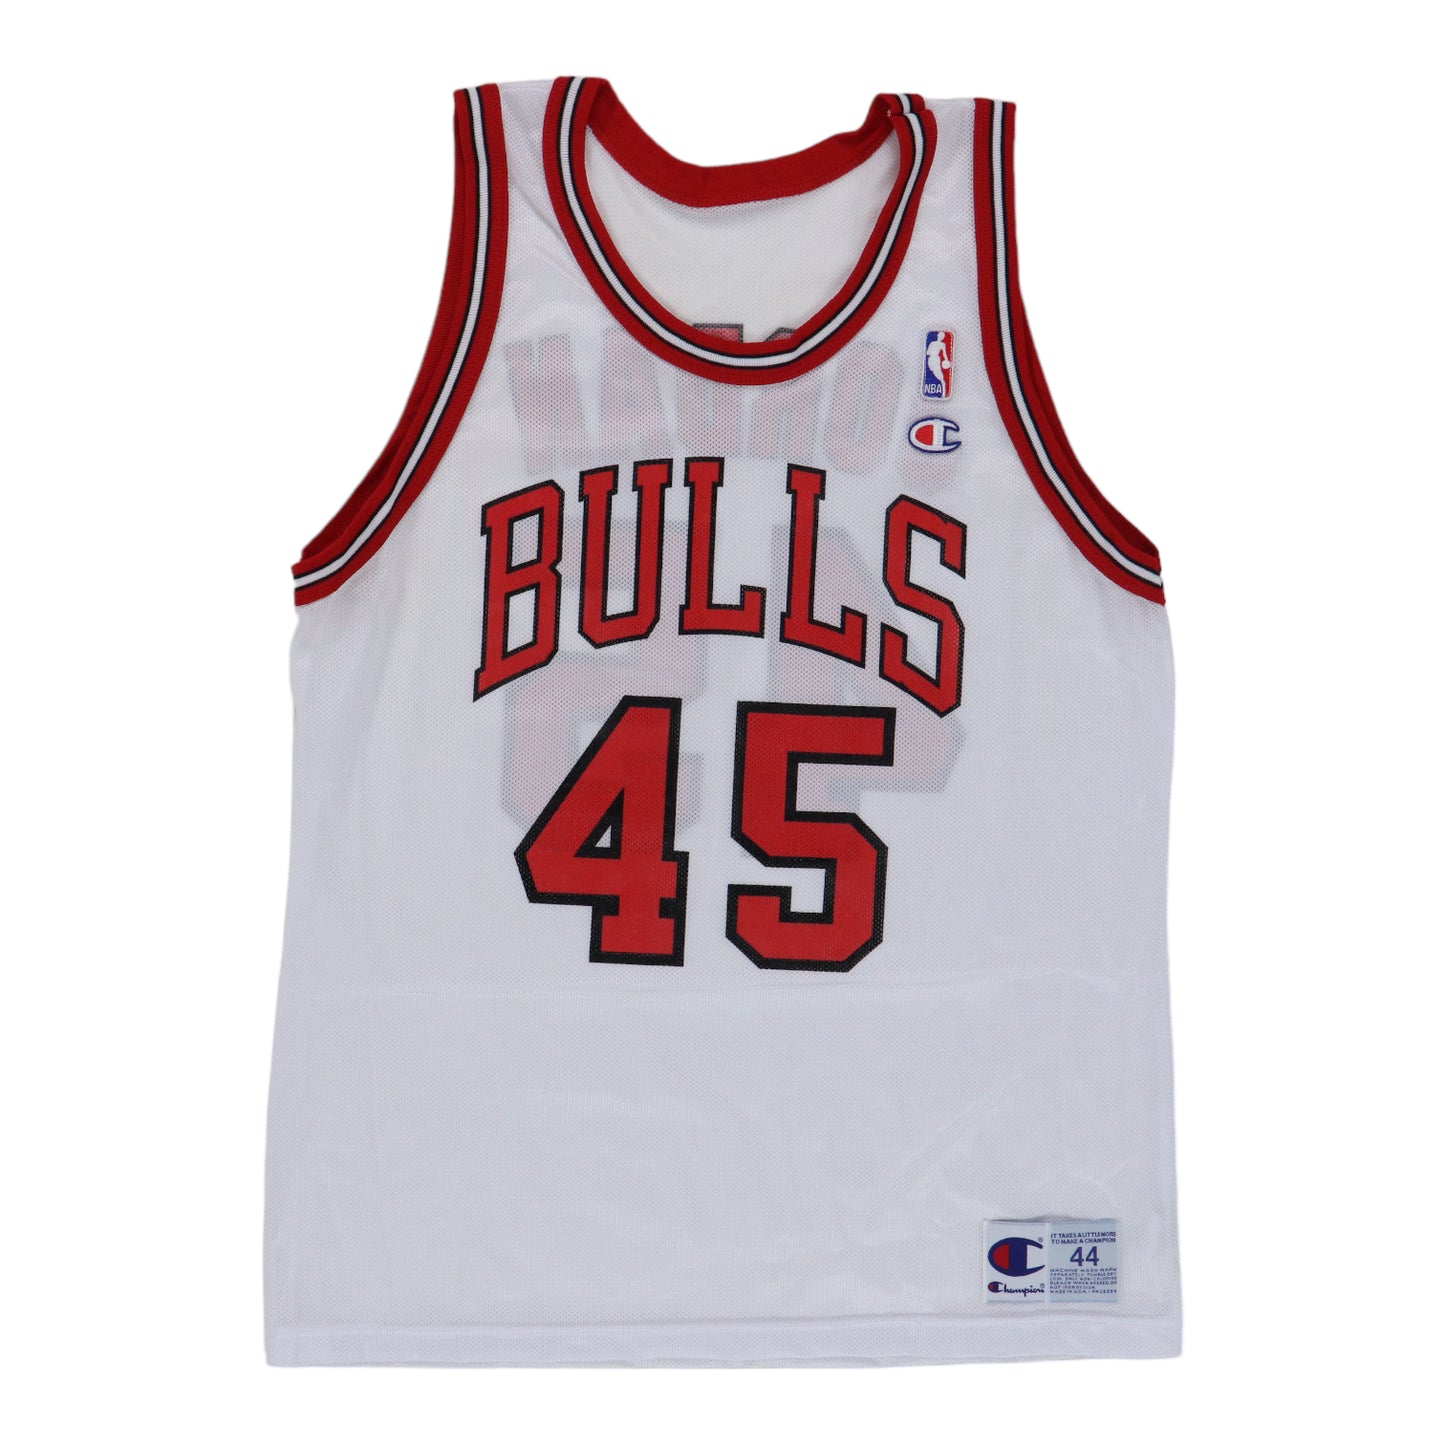 1995 Michael Jordan Chicago Bulls Champion #45 NBA Jersey Size 48